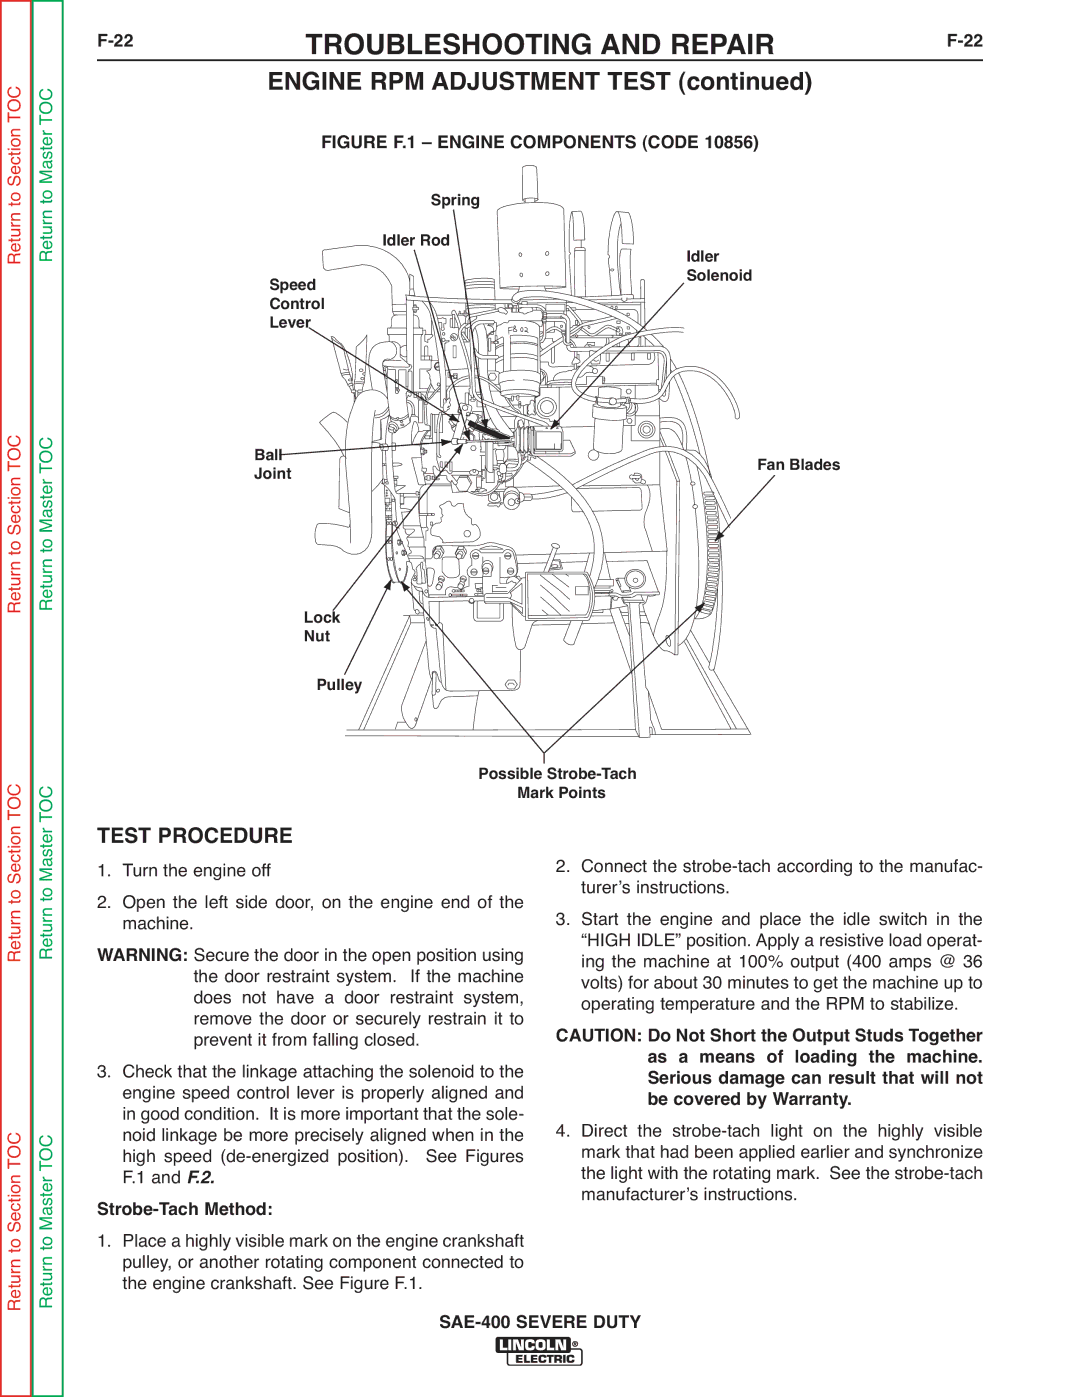 Lincoln Electric SVM187-A service manual Engine RPM Adjustment Test, Test Procedure, Strobe-Tach Method 